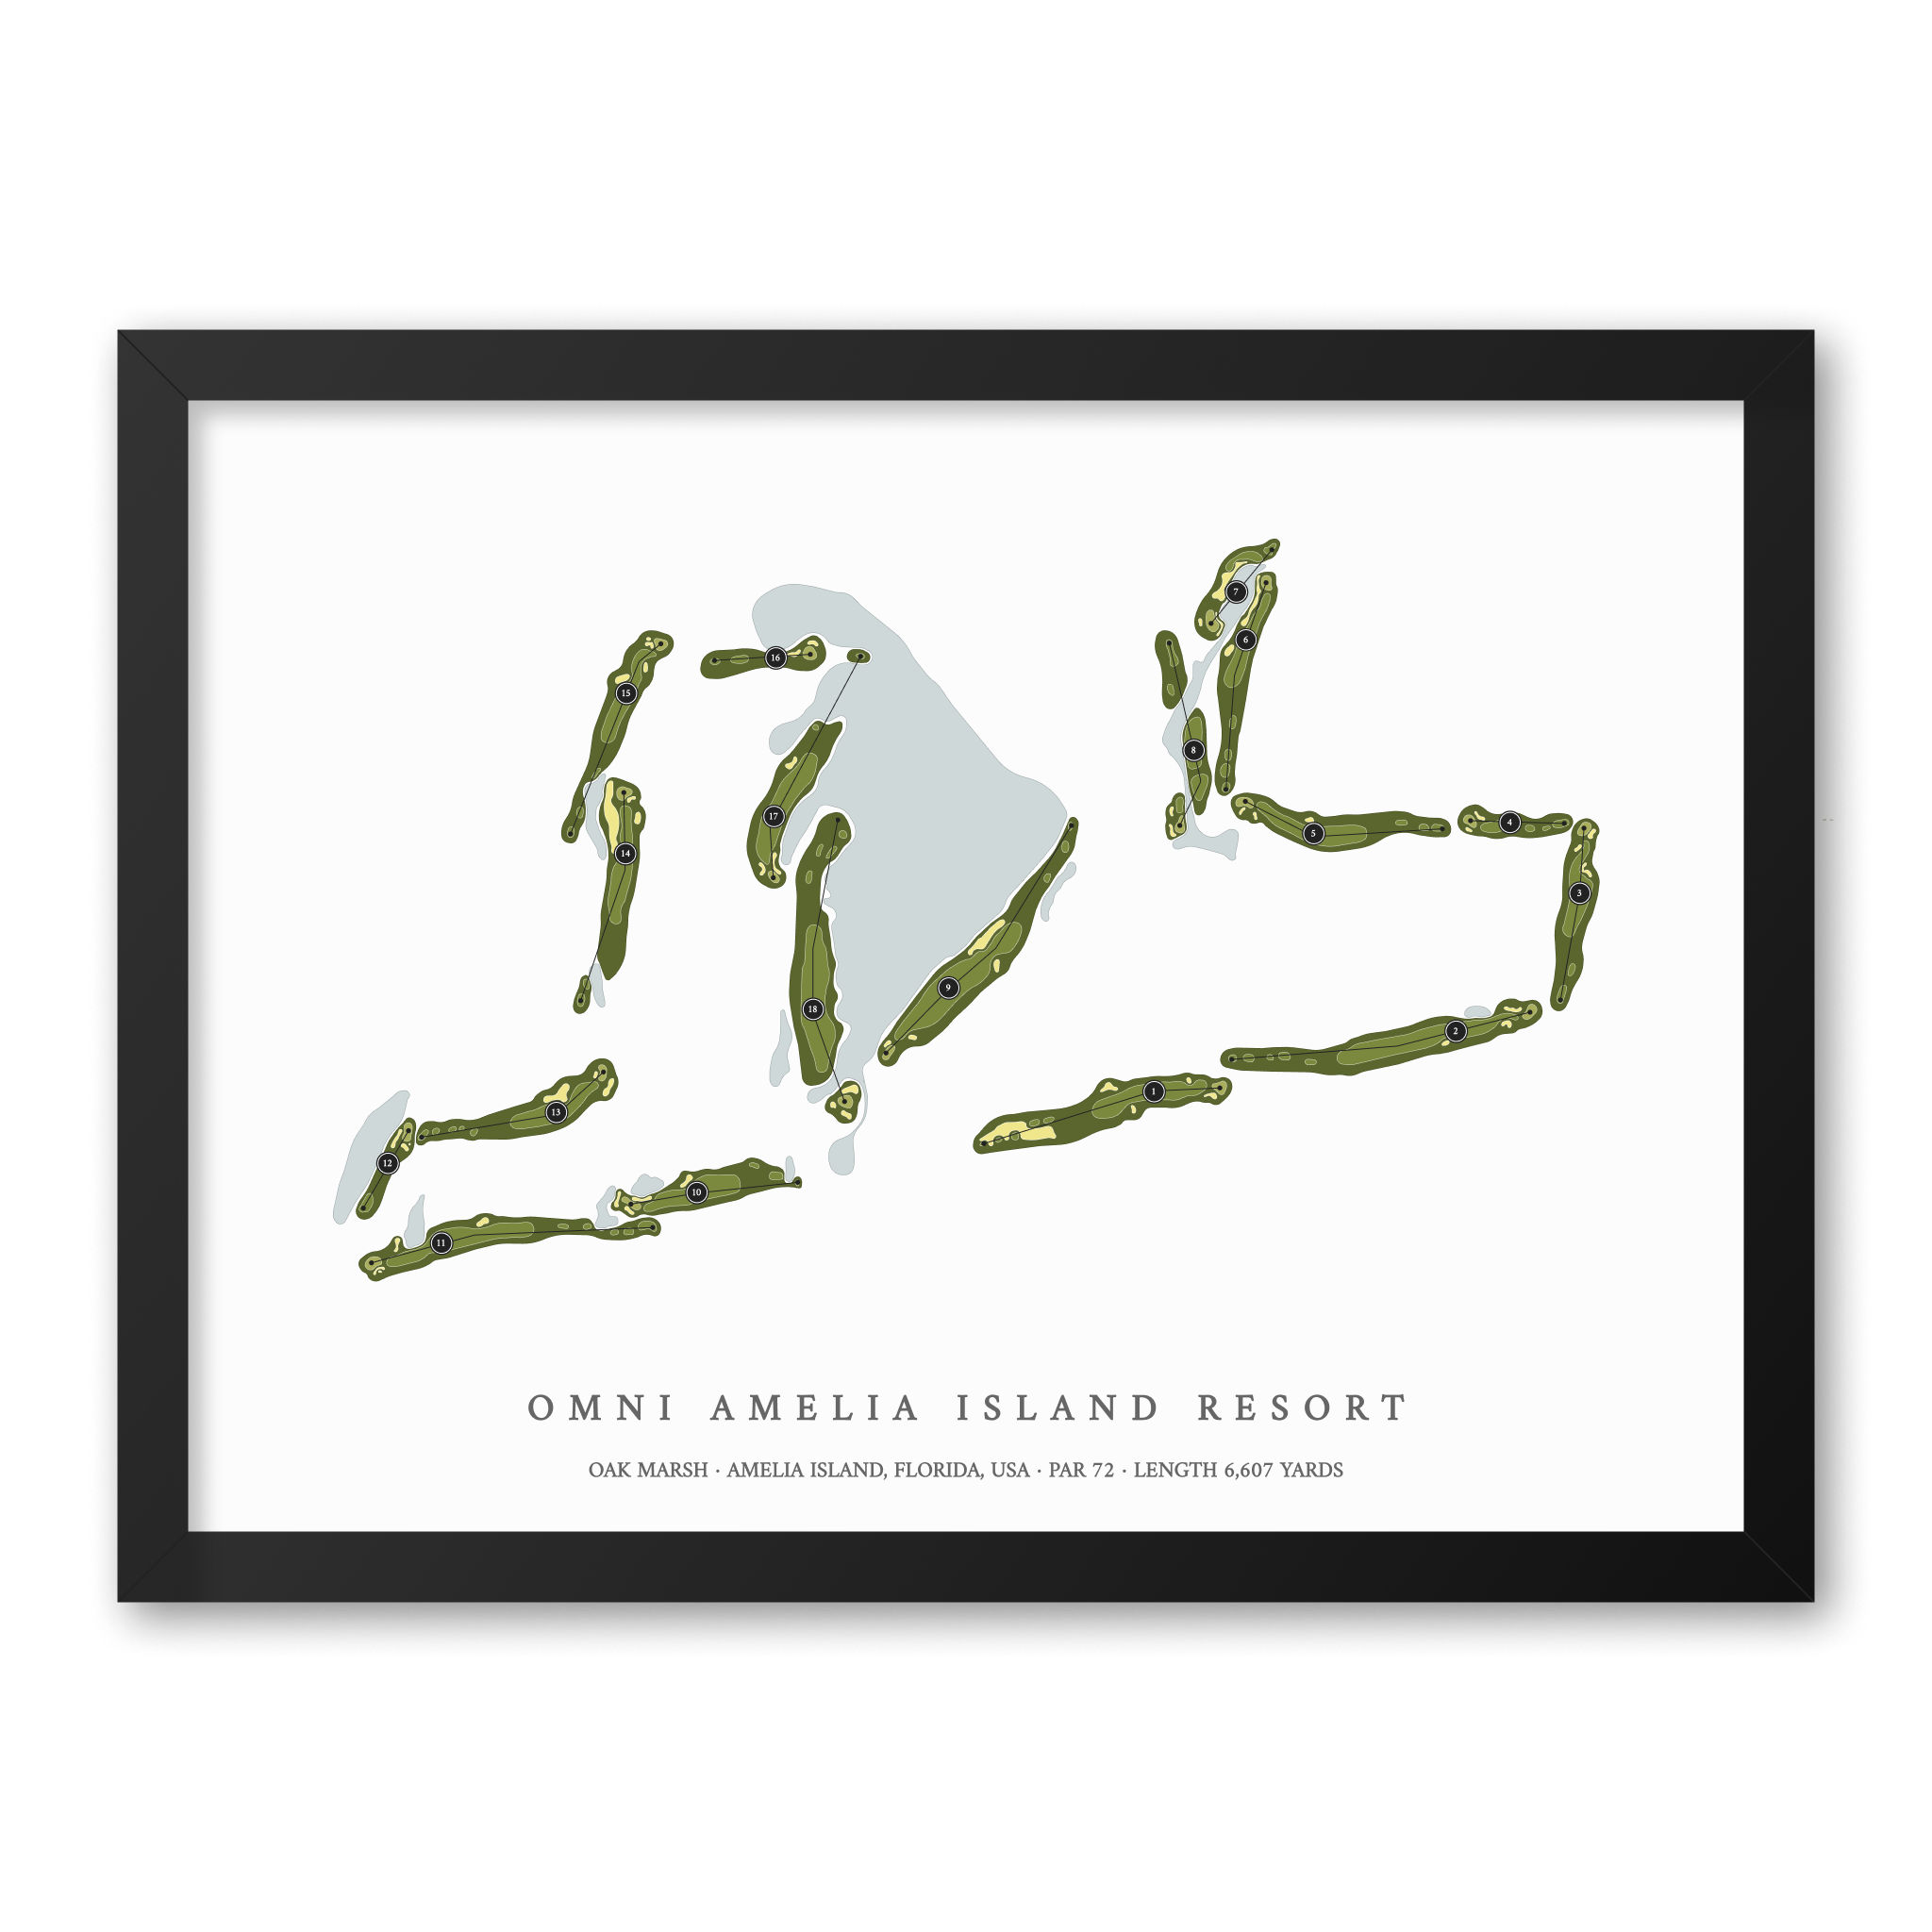 Omni Amelia Island Resort - Oak Marsh | Golf Course Map | Black Frame